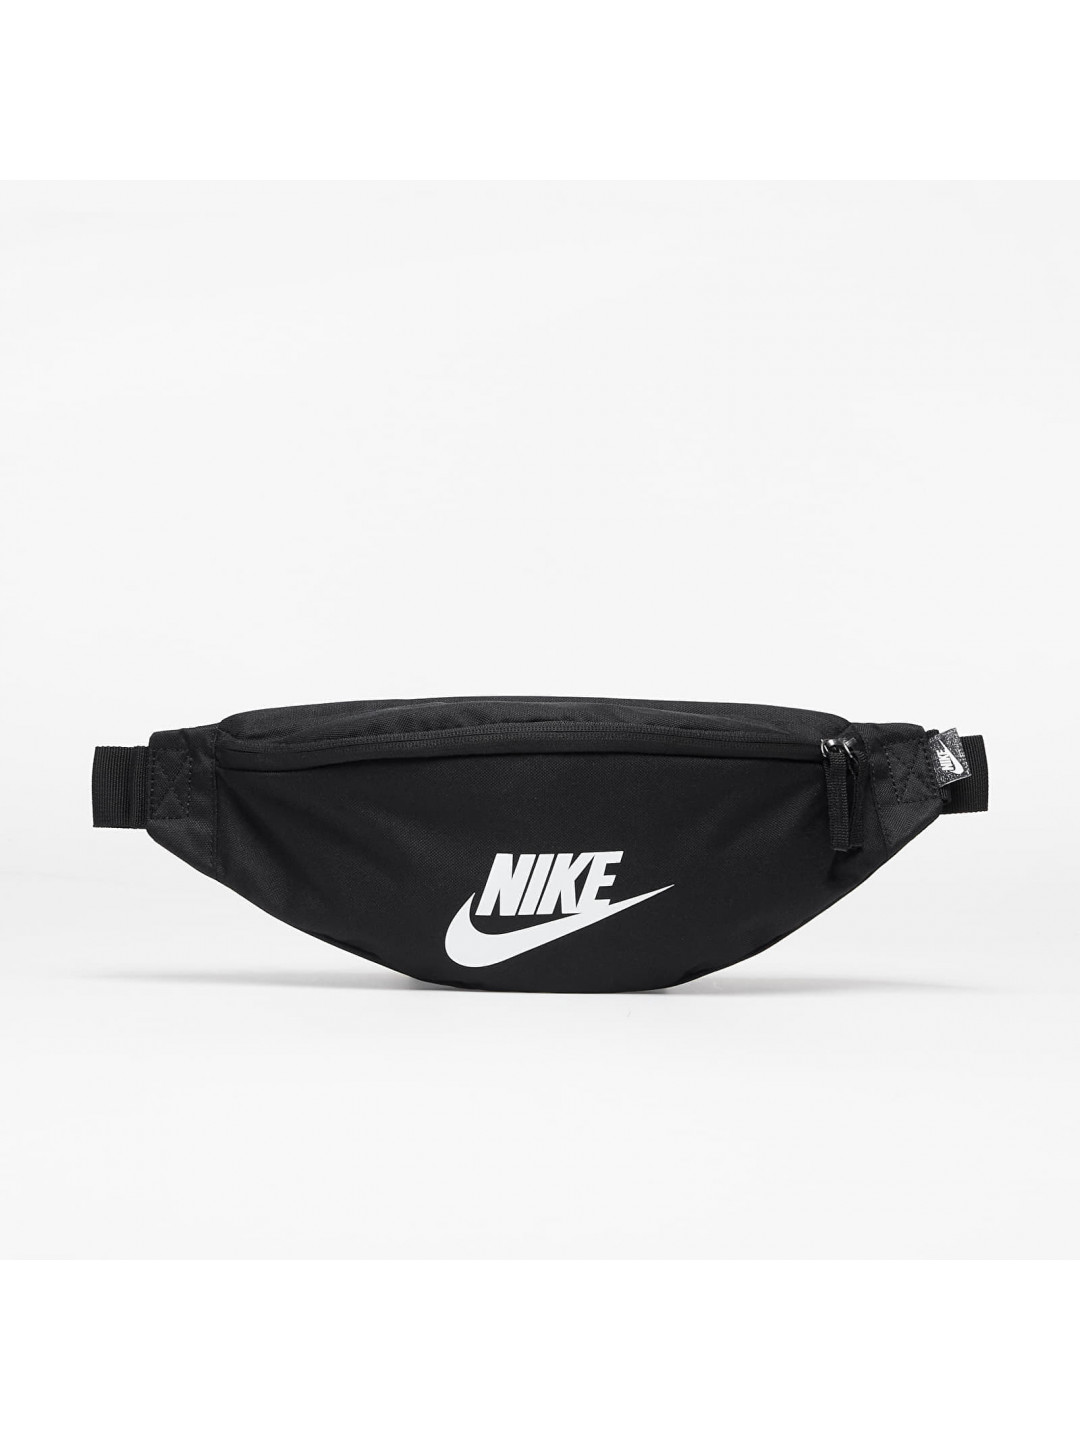 Nike Heritage Waistpack Black Black White